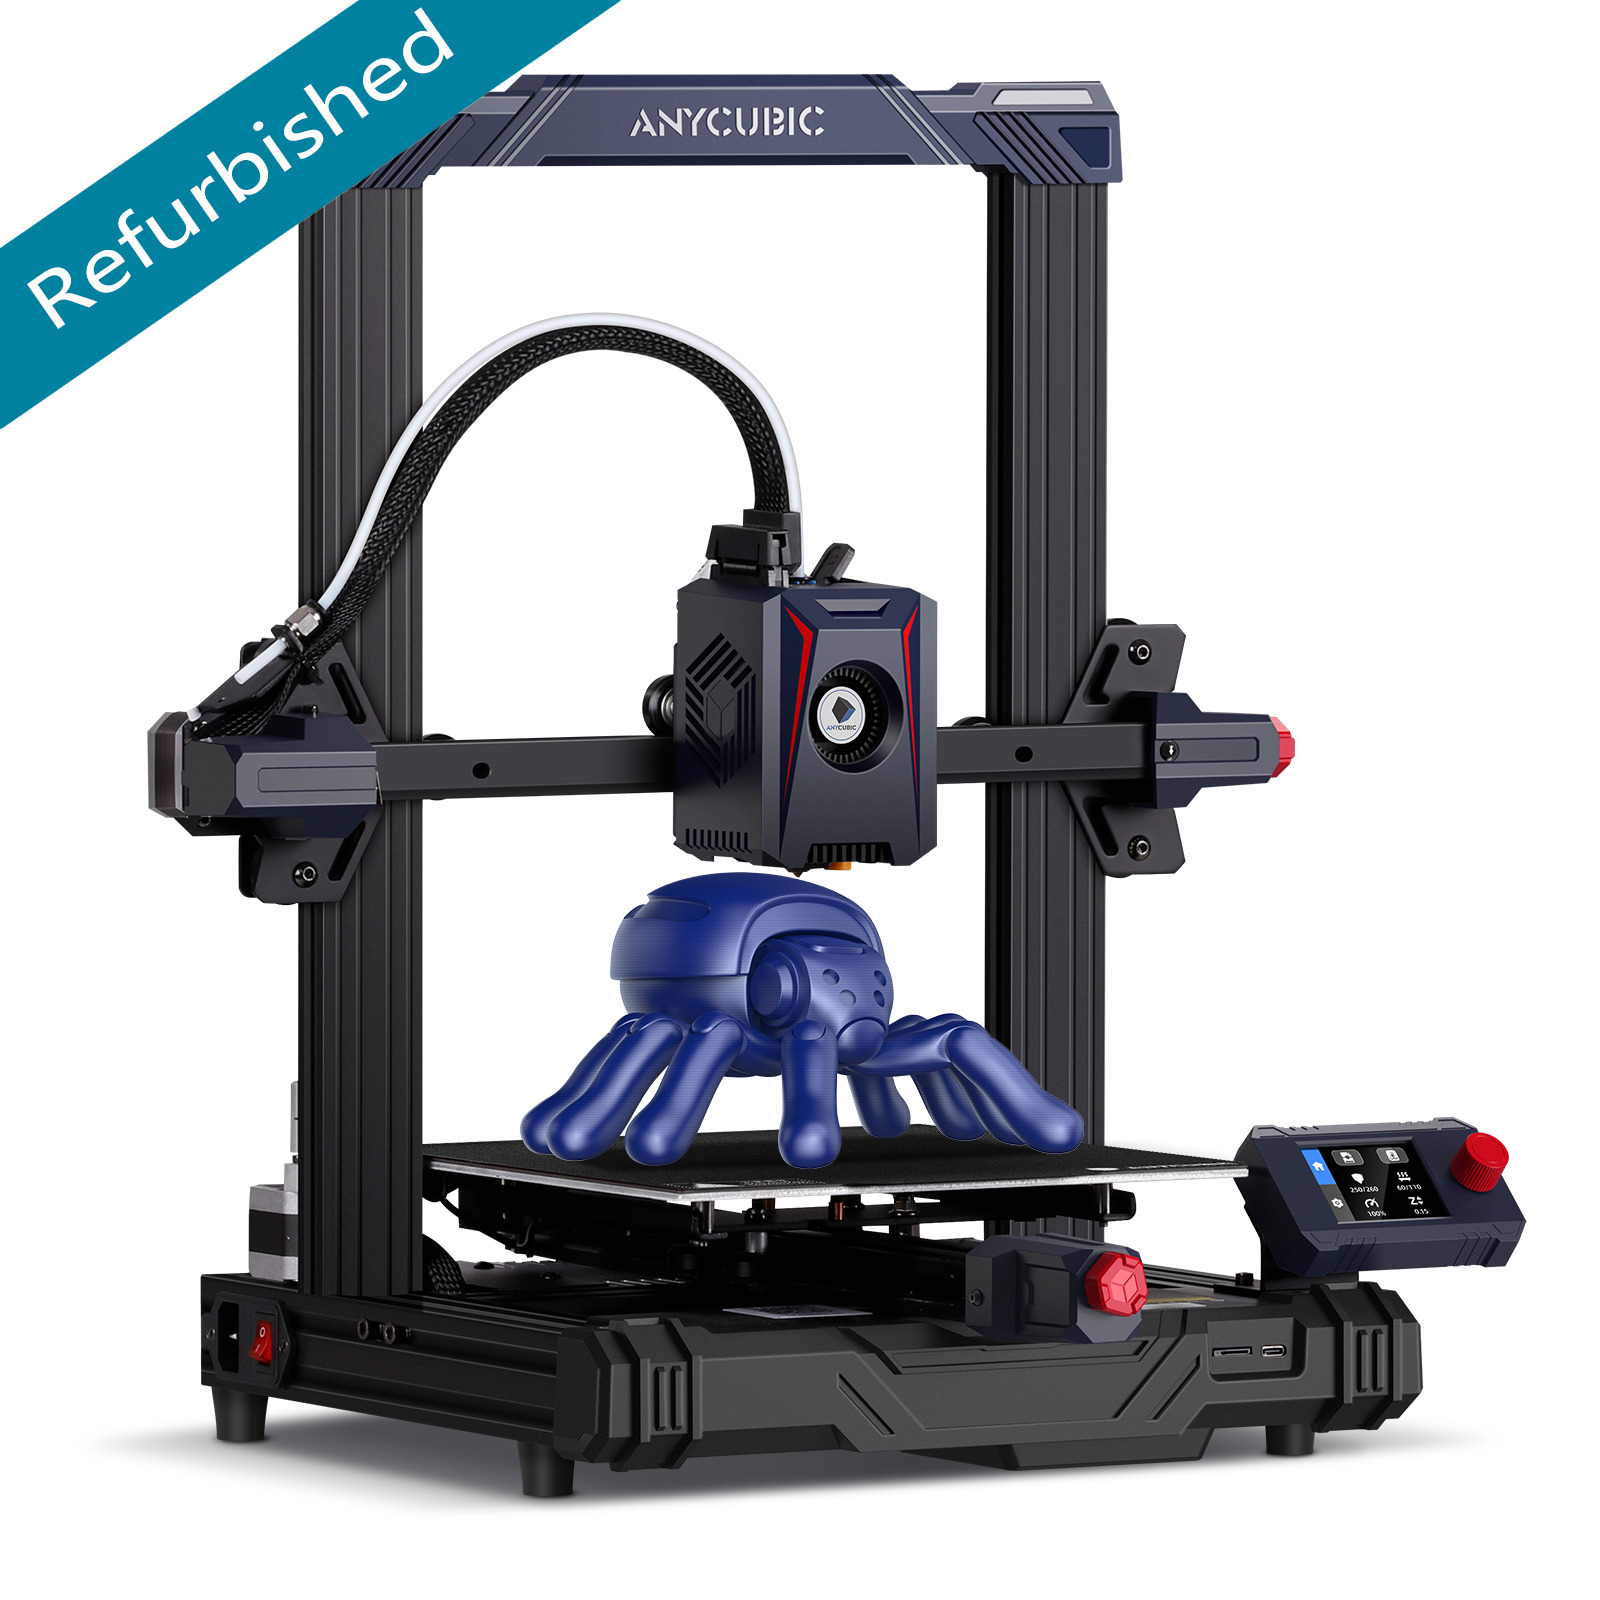 【Refurbished】ANYCUBIC KOBRA 2 Neo FDM 3D Printer 250mm/s high Printing Speed